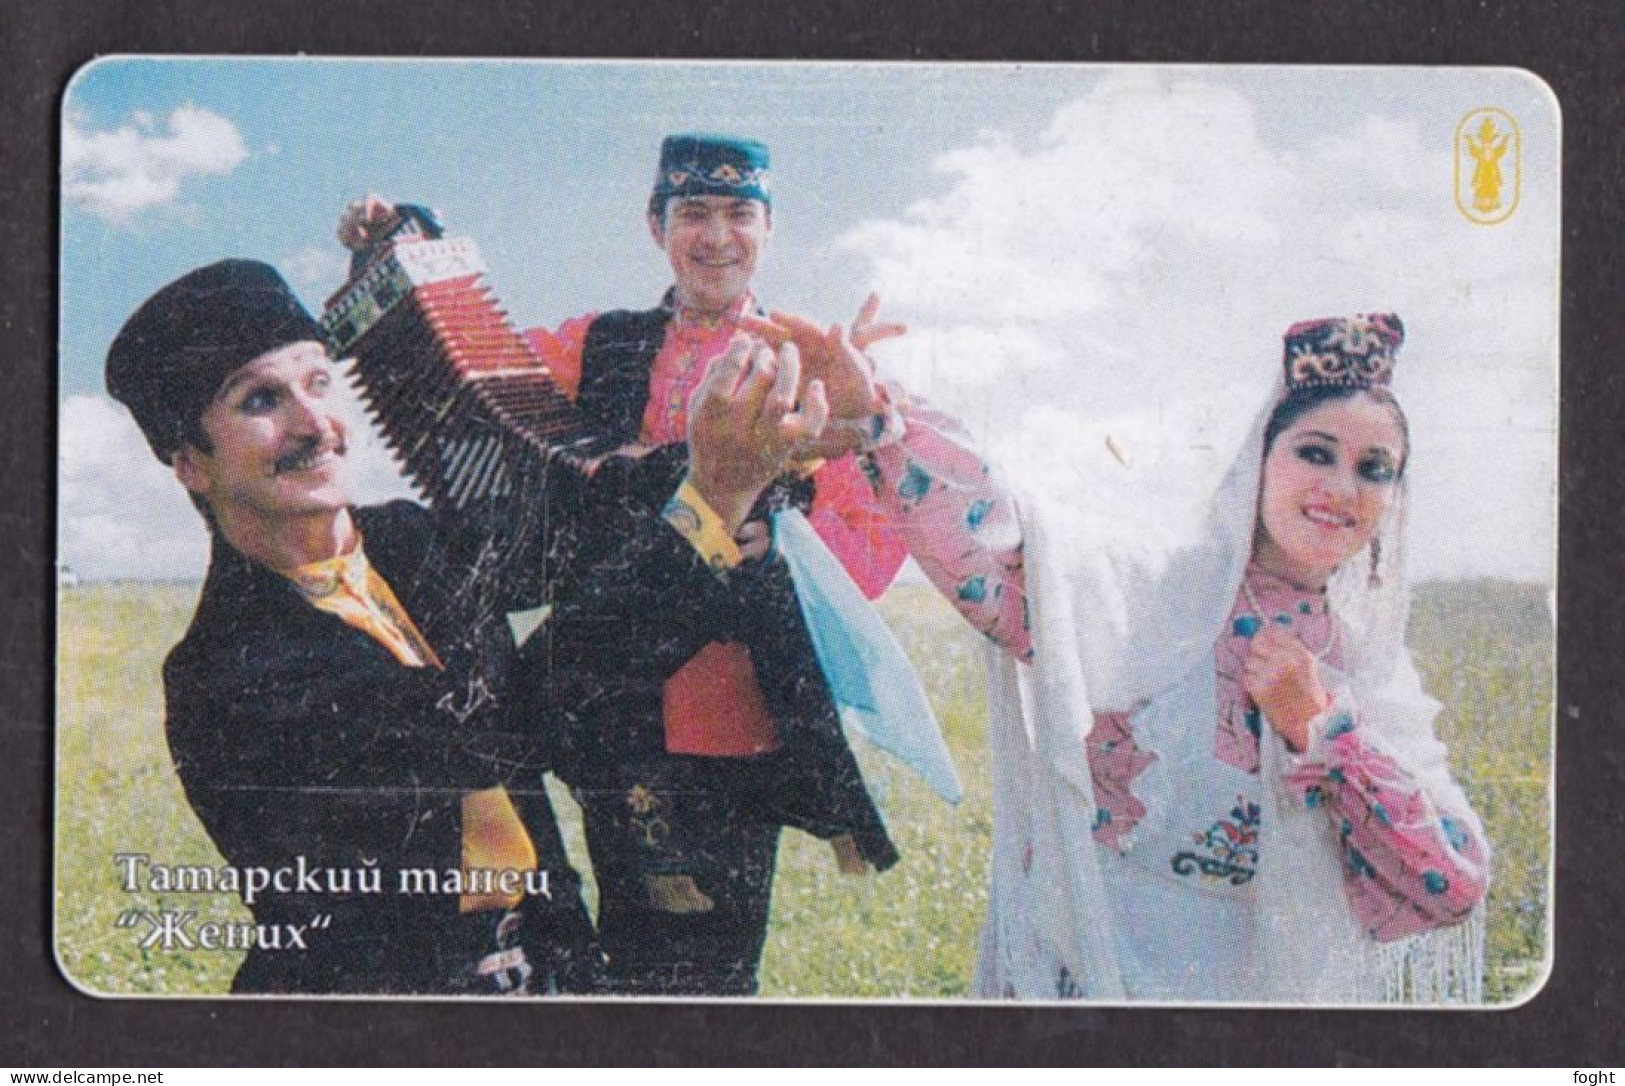 2002 Russia Bashinformsvyaz-Ufa,Tatar Dance "Bridegroom",90 Units Card,Col:RU-BIS-V-006 - Russie